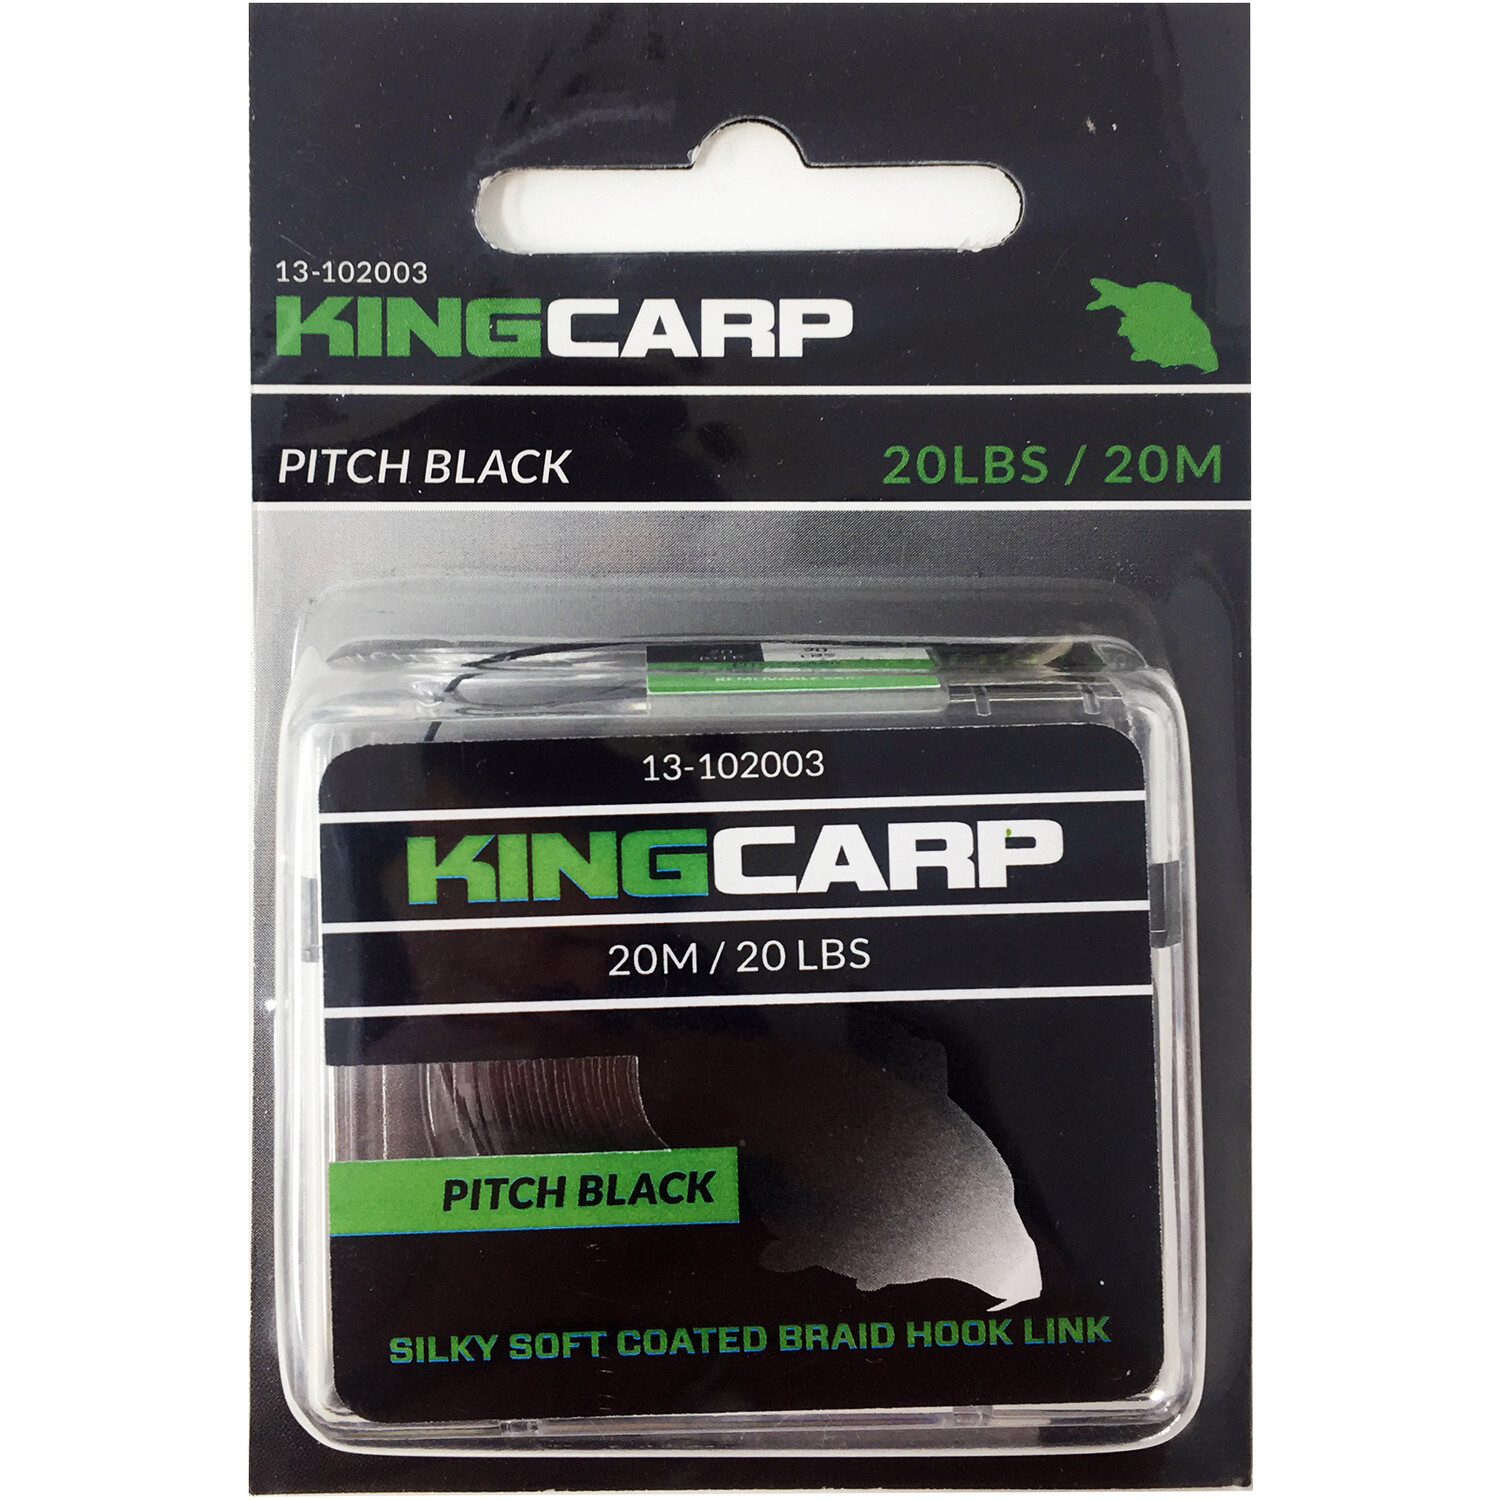 Pitch Black King Carp Coated Braid Hook Link